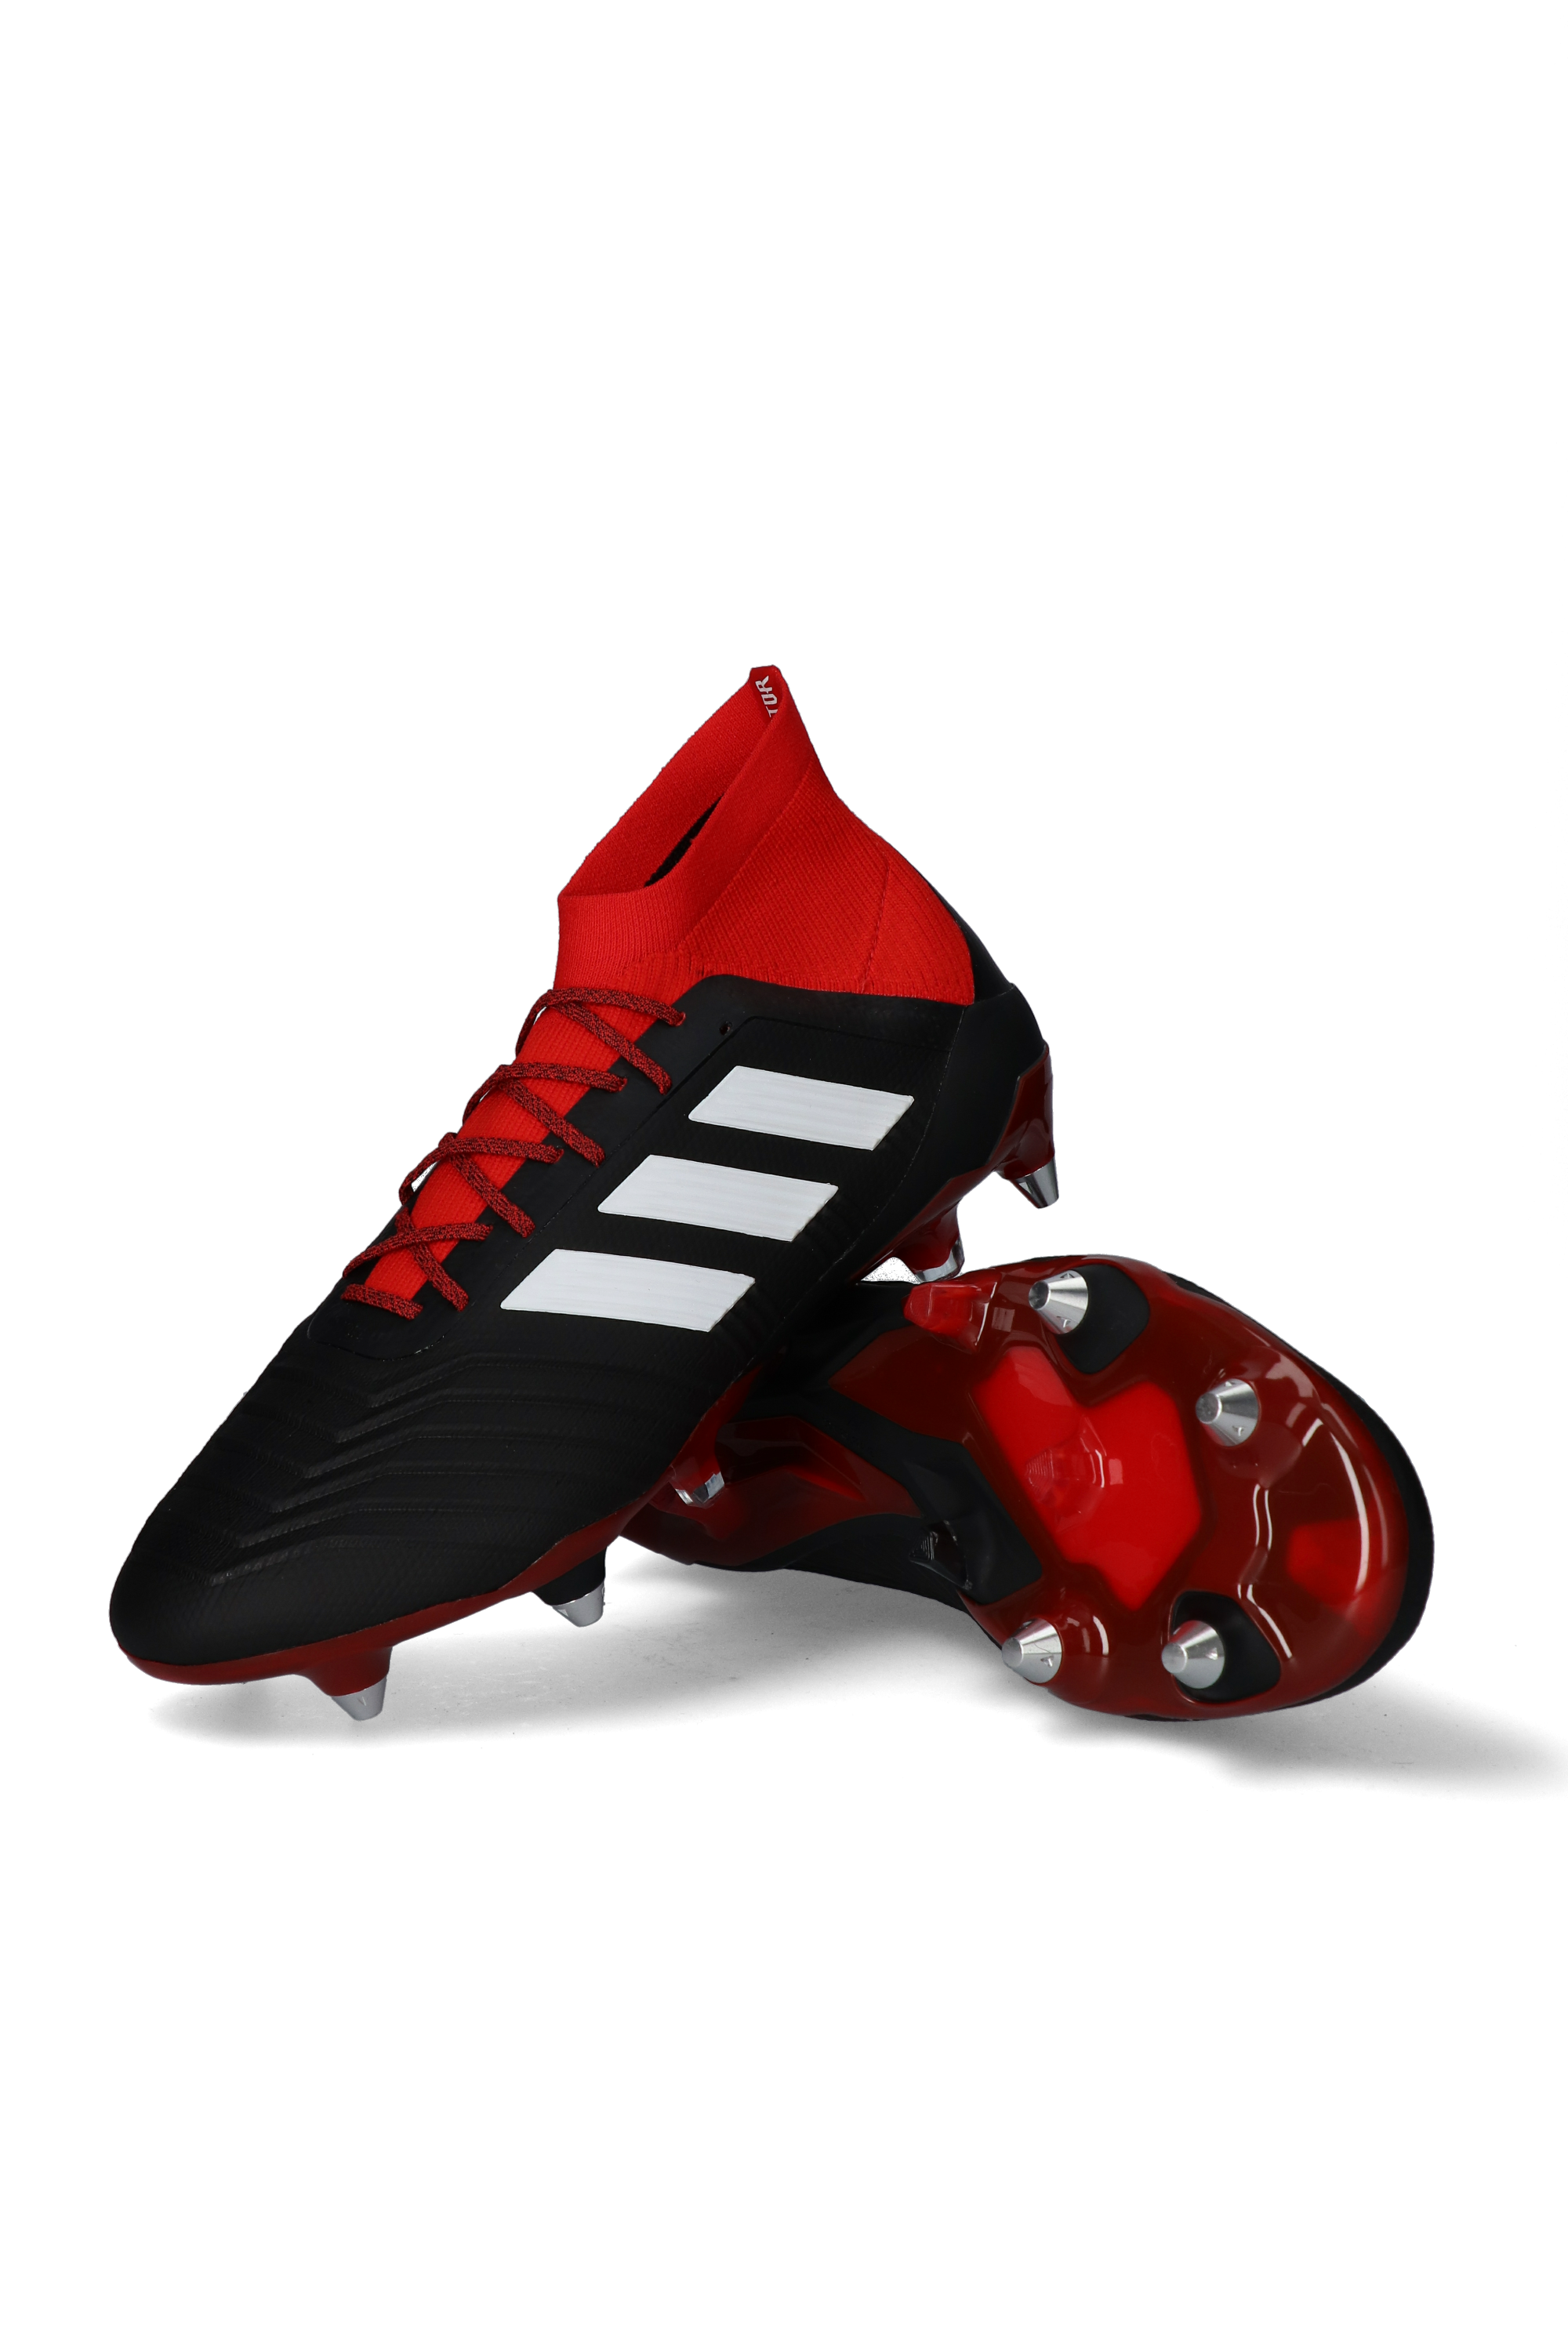 adidas Predator 18.1 SG | R-GOL.com - Football boots \u0026 equipment